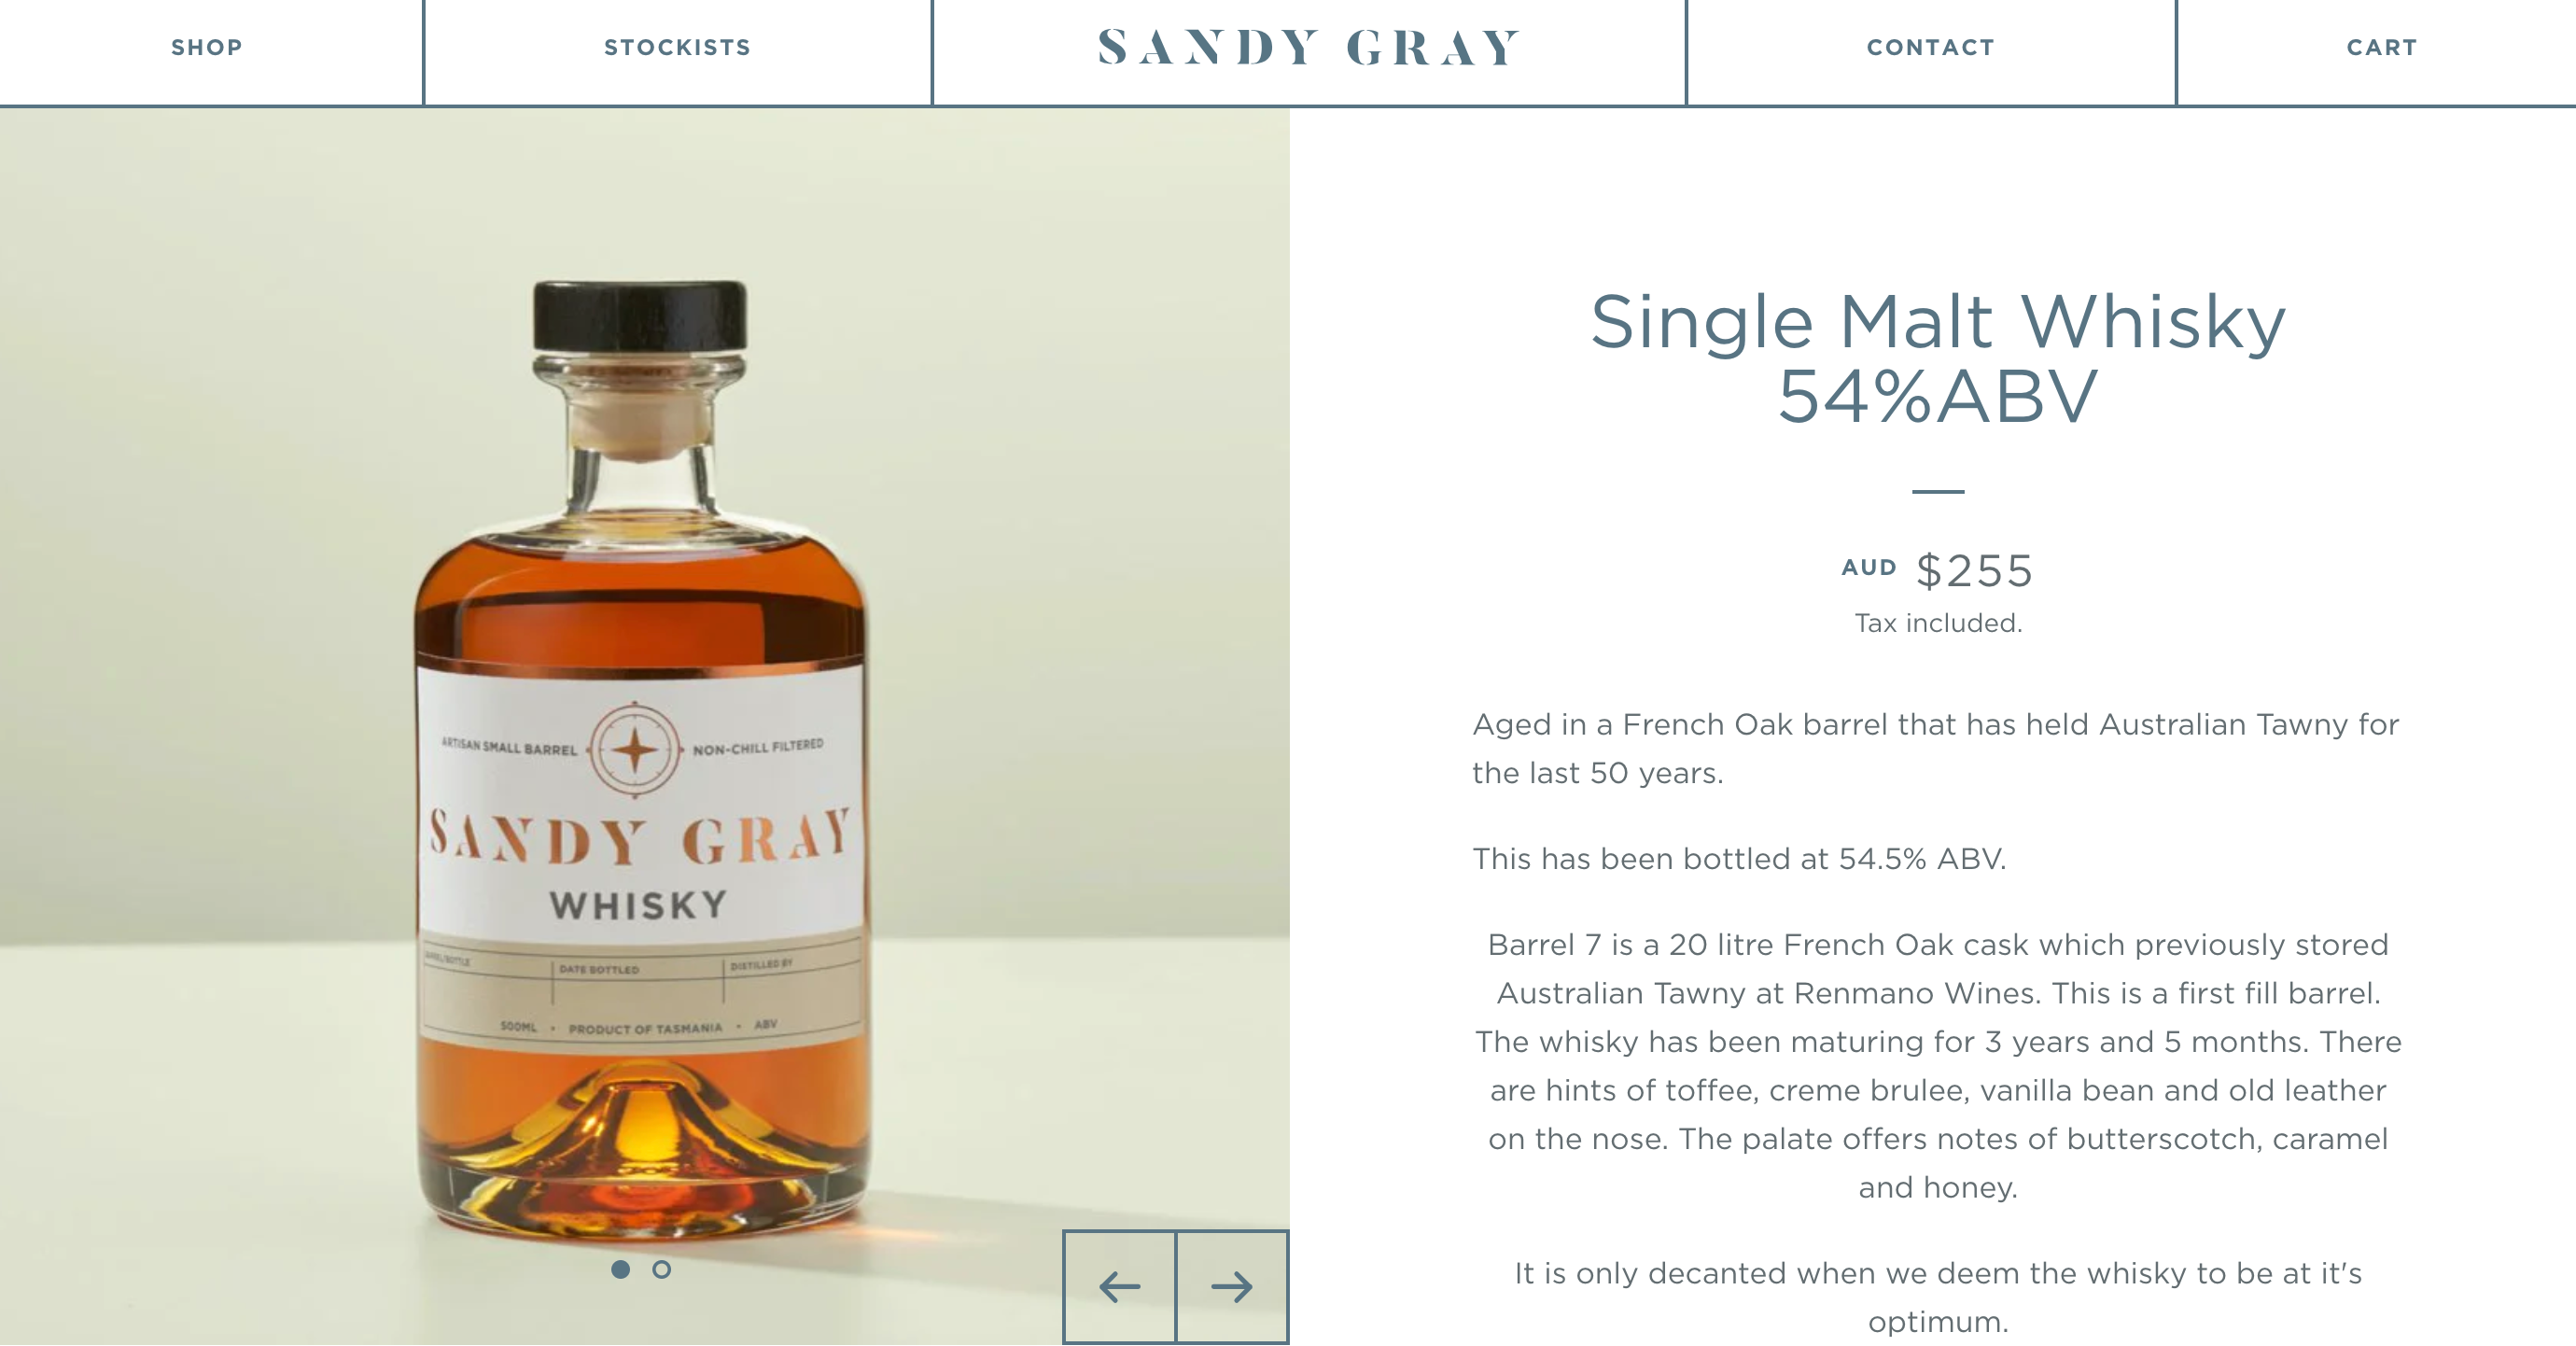 sandygraywhisky product page design